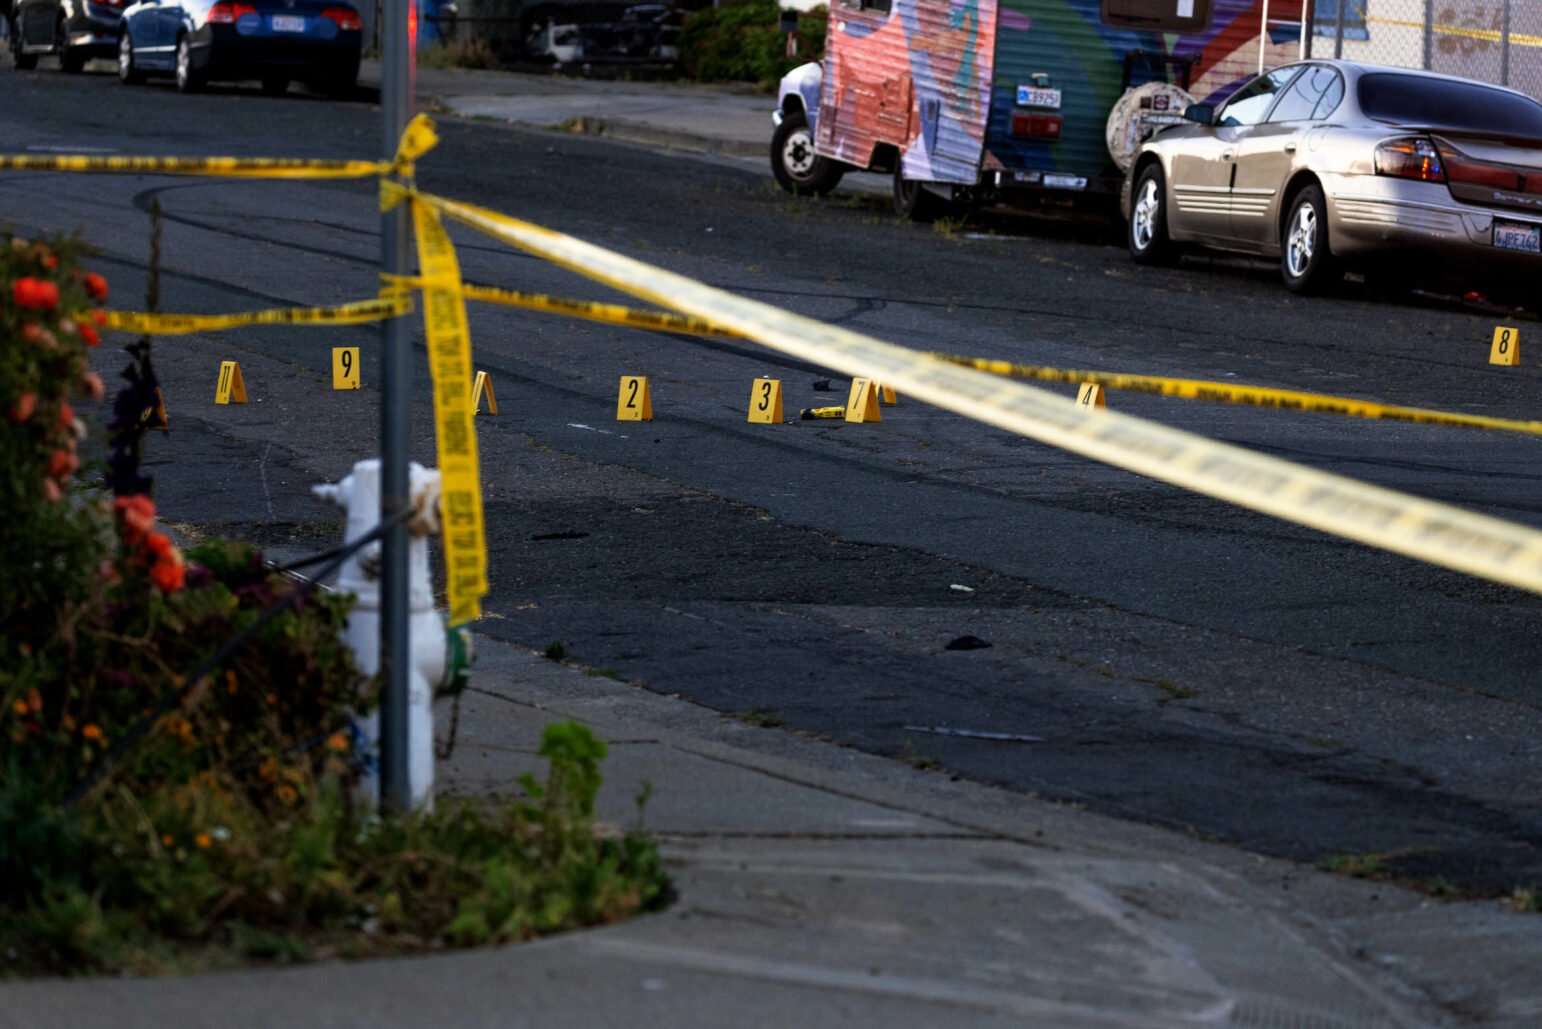 A Taser lies behind crime scene tape outdoors at dusk